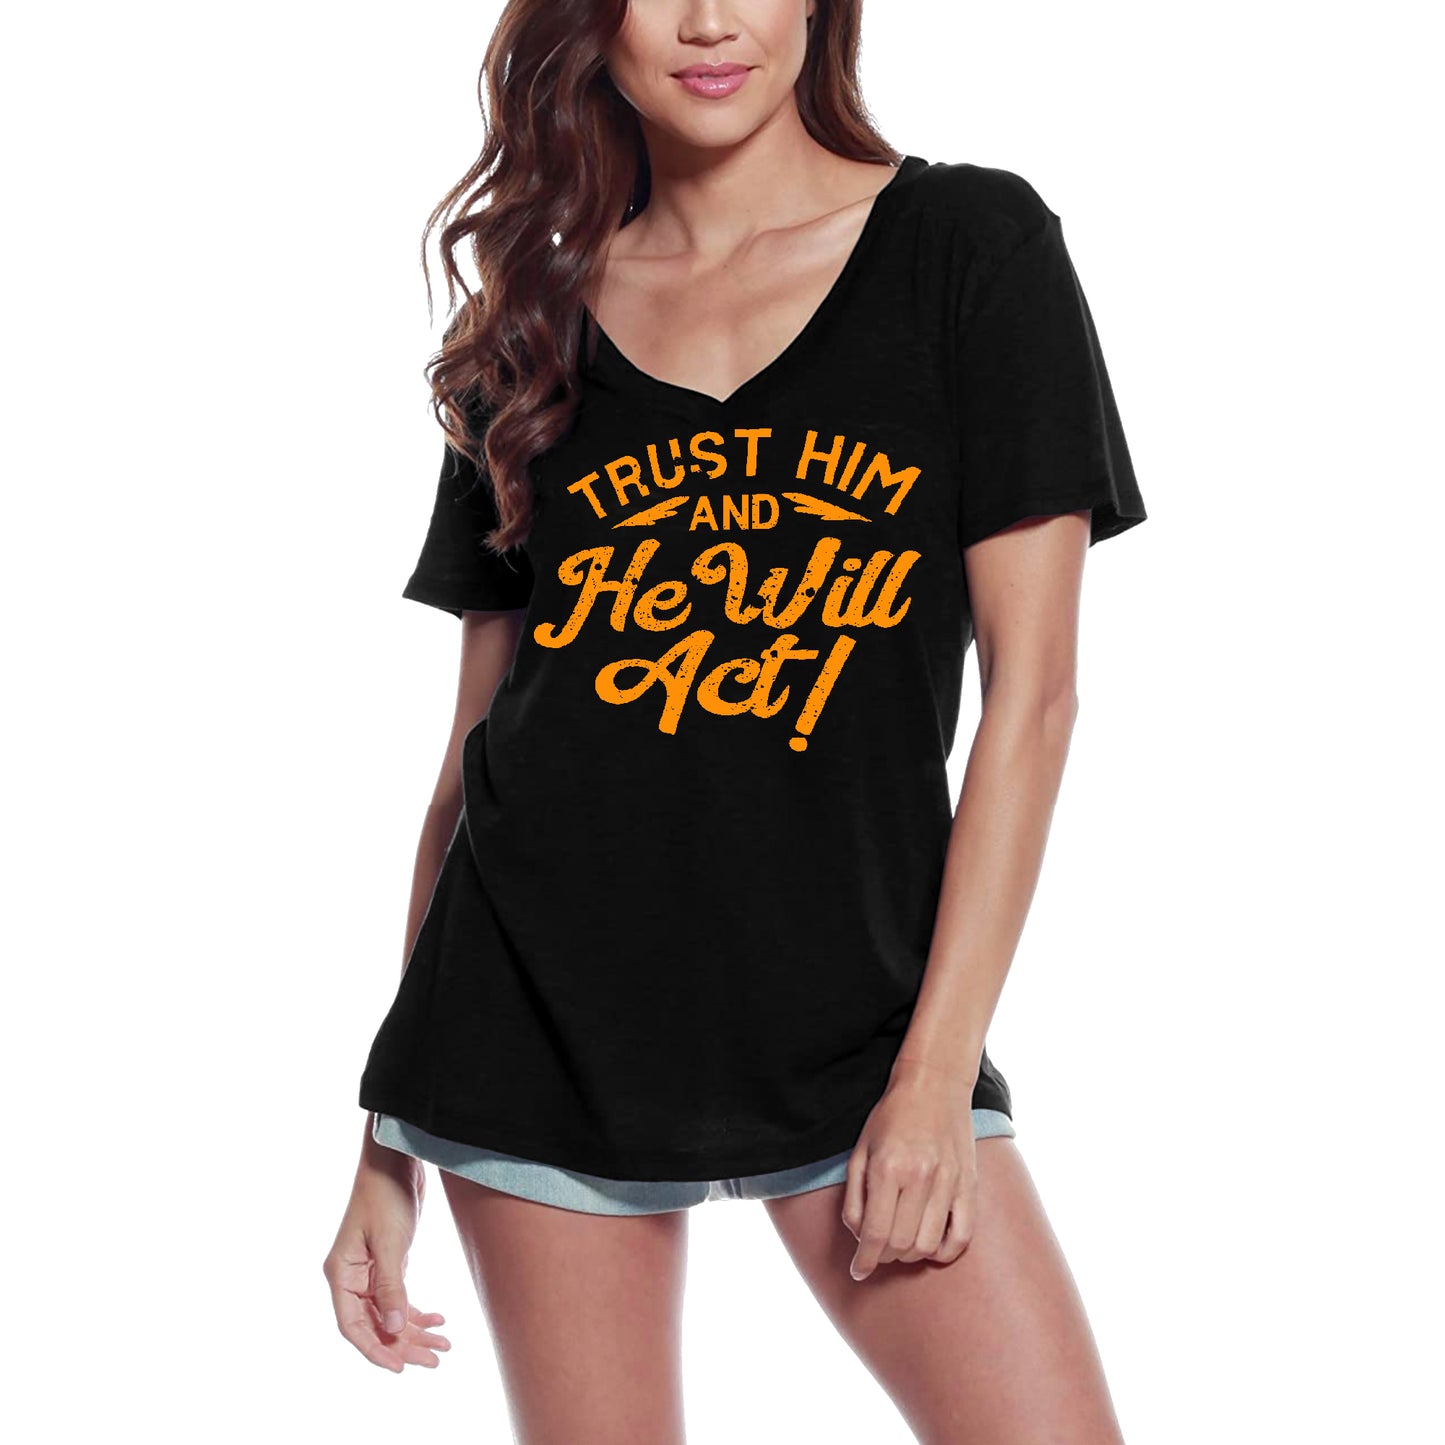 ULTRABASIC Women's T-Shirt Trust Him and He Will Act - Motivational Gift